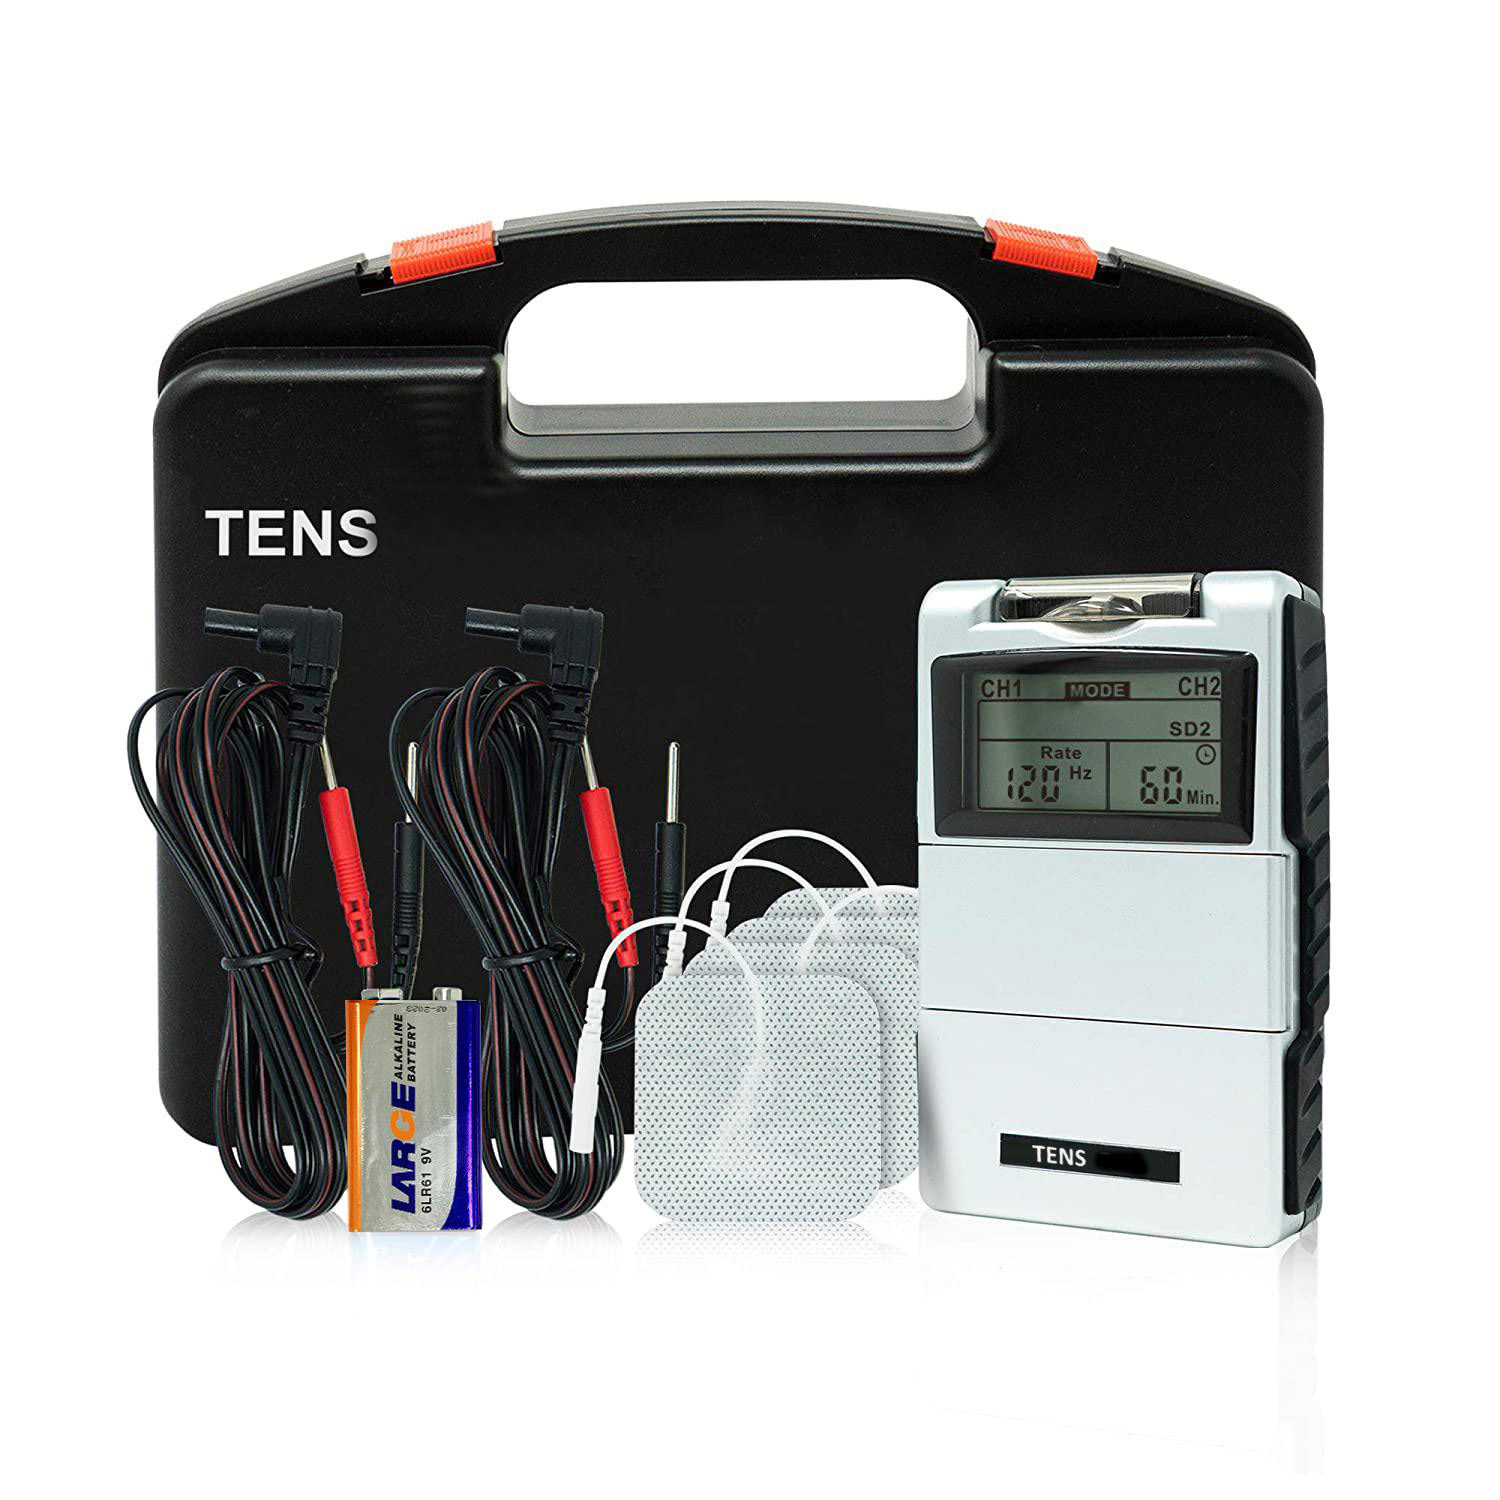 NUEVO TWIN-STIM Li-Recargable / Electroterapia TENS+EMS / Accesorios